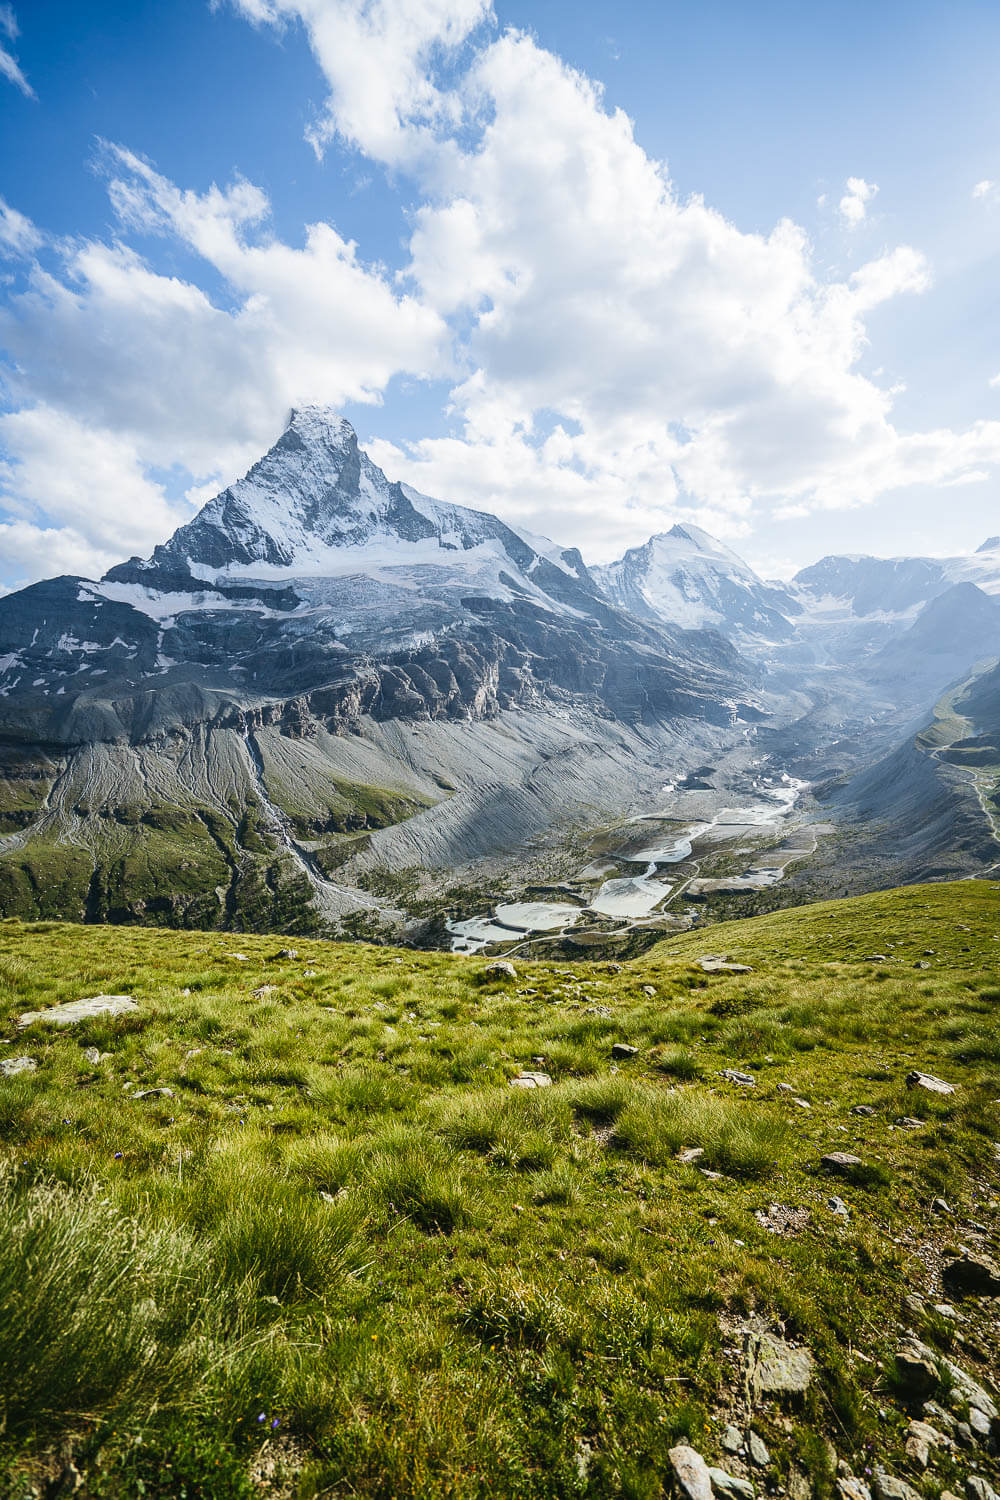 The Matterhorn Glacier Valley